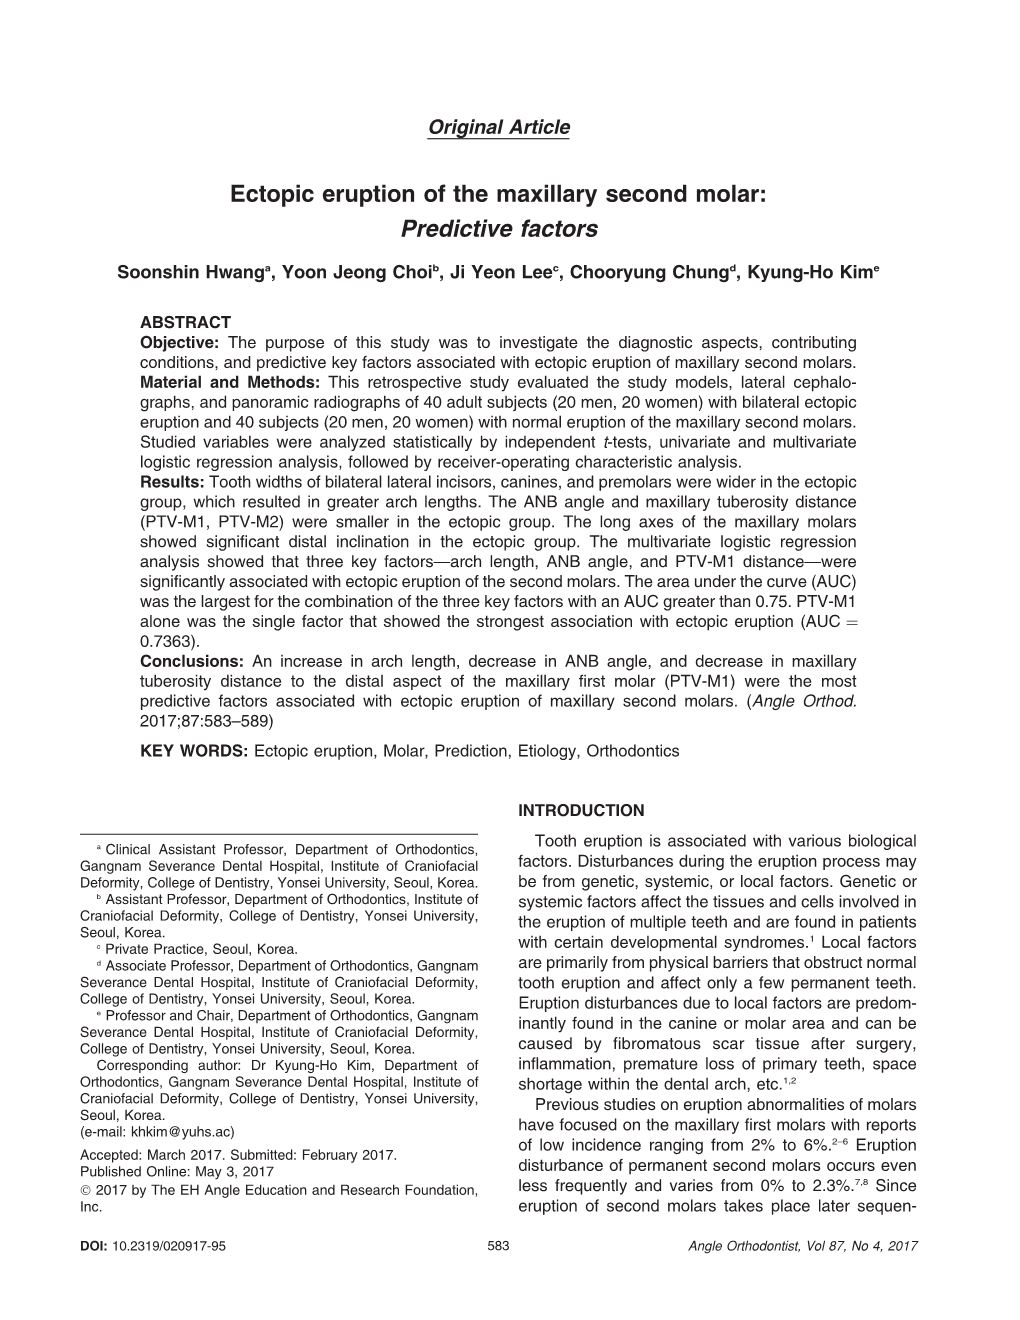 Ectopic Eruption of the Maxillary Second Molar: Predictive Factors